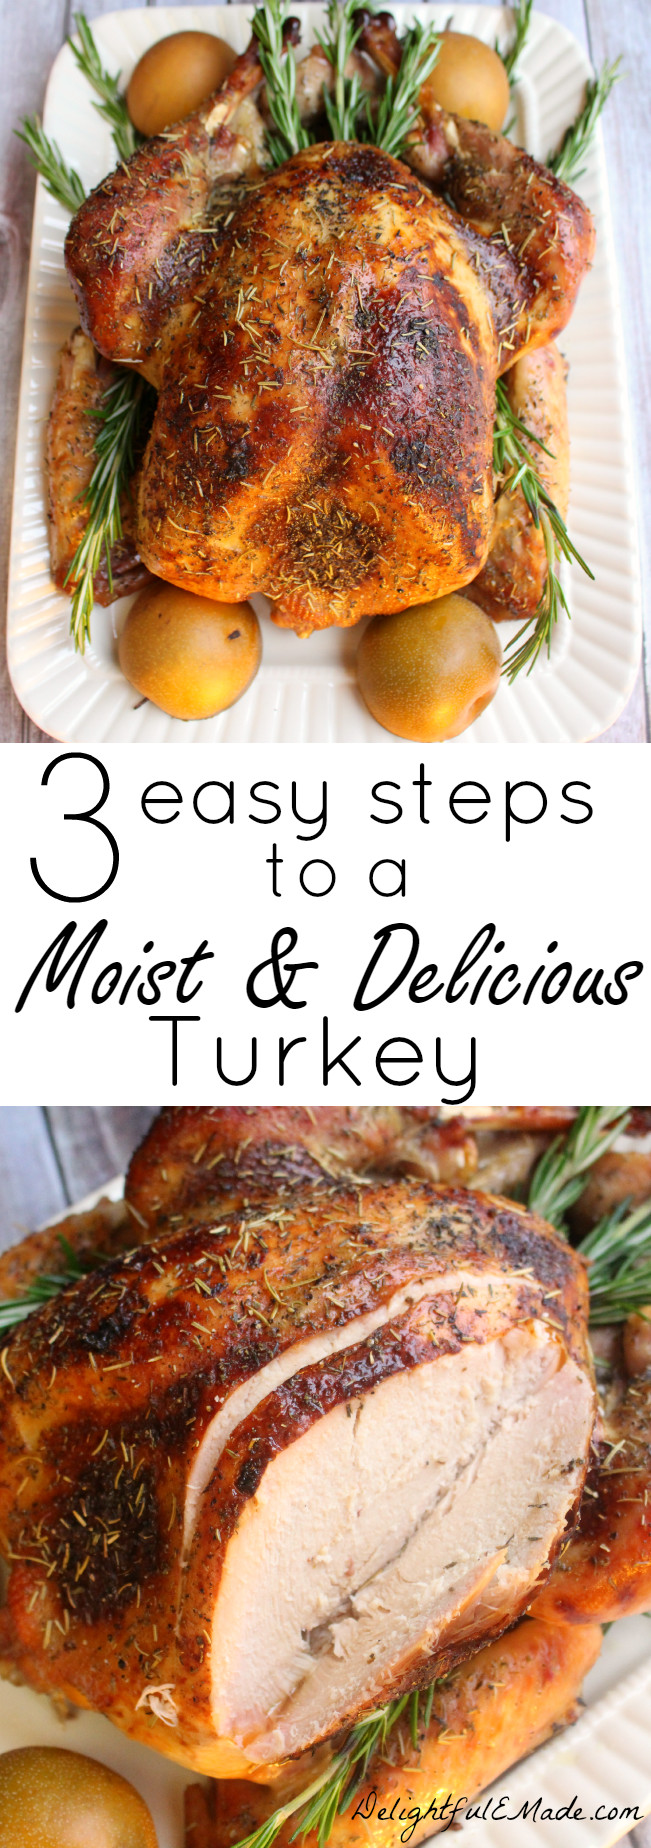 Easy Thanksgiving Turkey Recipes
 Tired of dry bland turkey I ll show you three easy steps